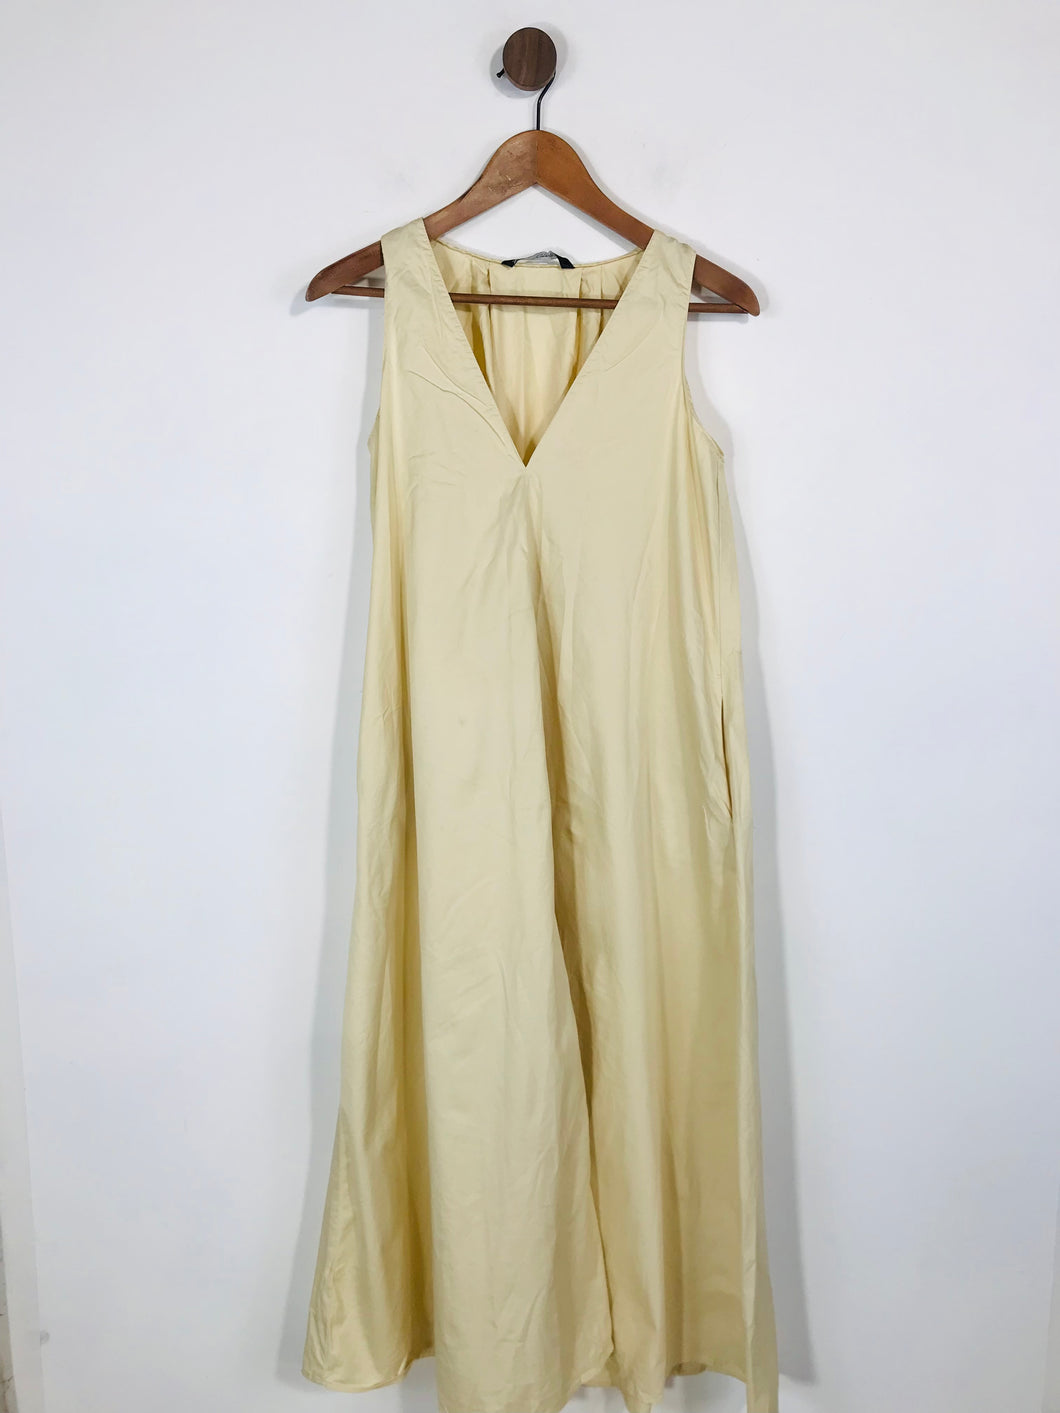 Zara Women's Cotton Prairie Shift Dress | XS UK6-8 | Yellow